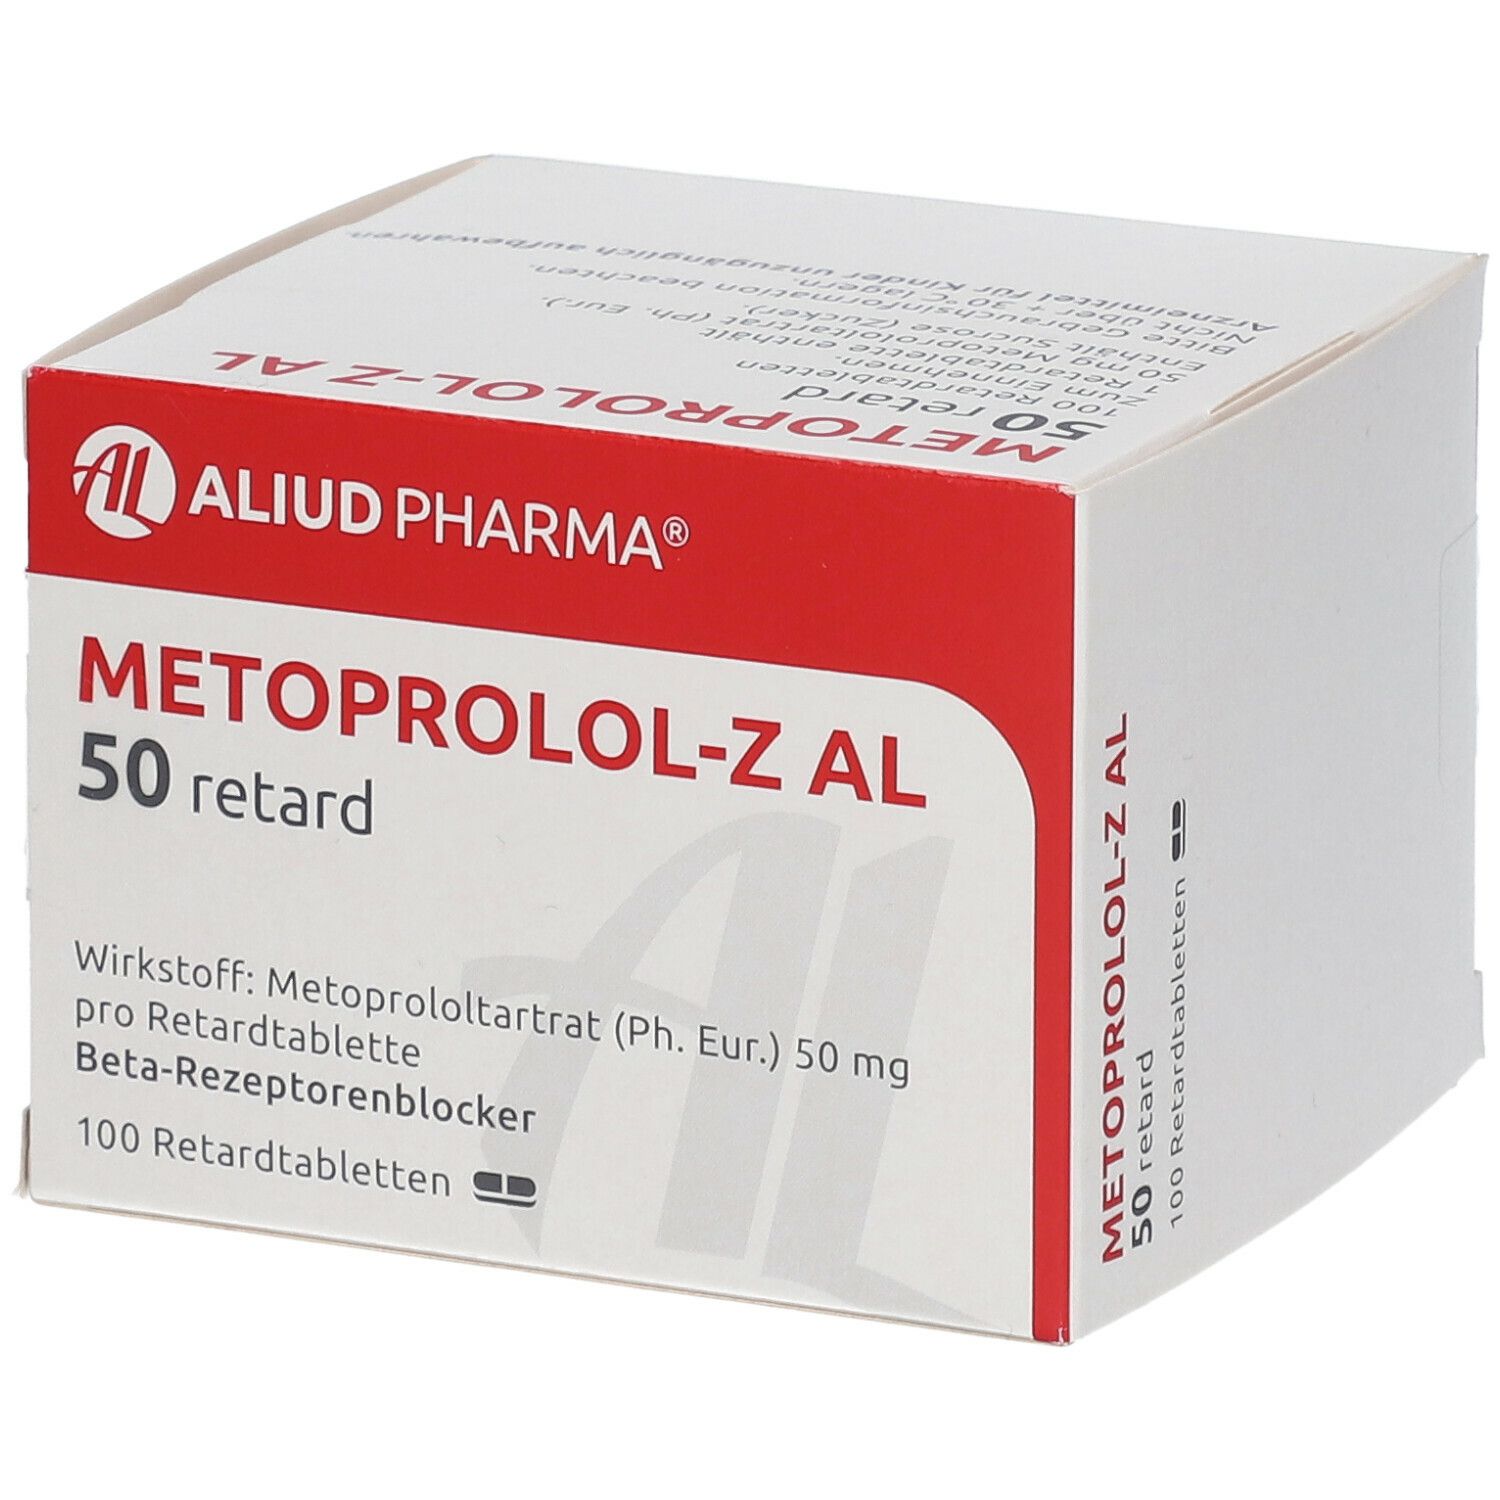 Metoprolol Z AL 50 retard